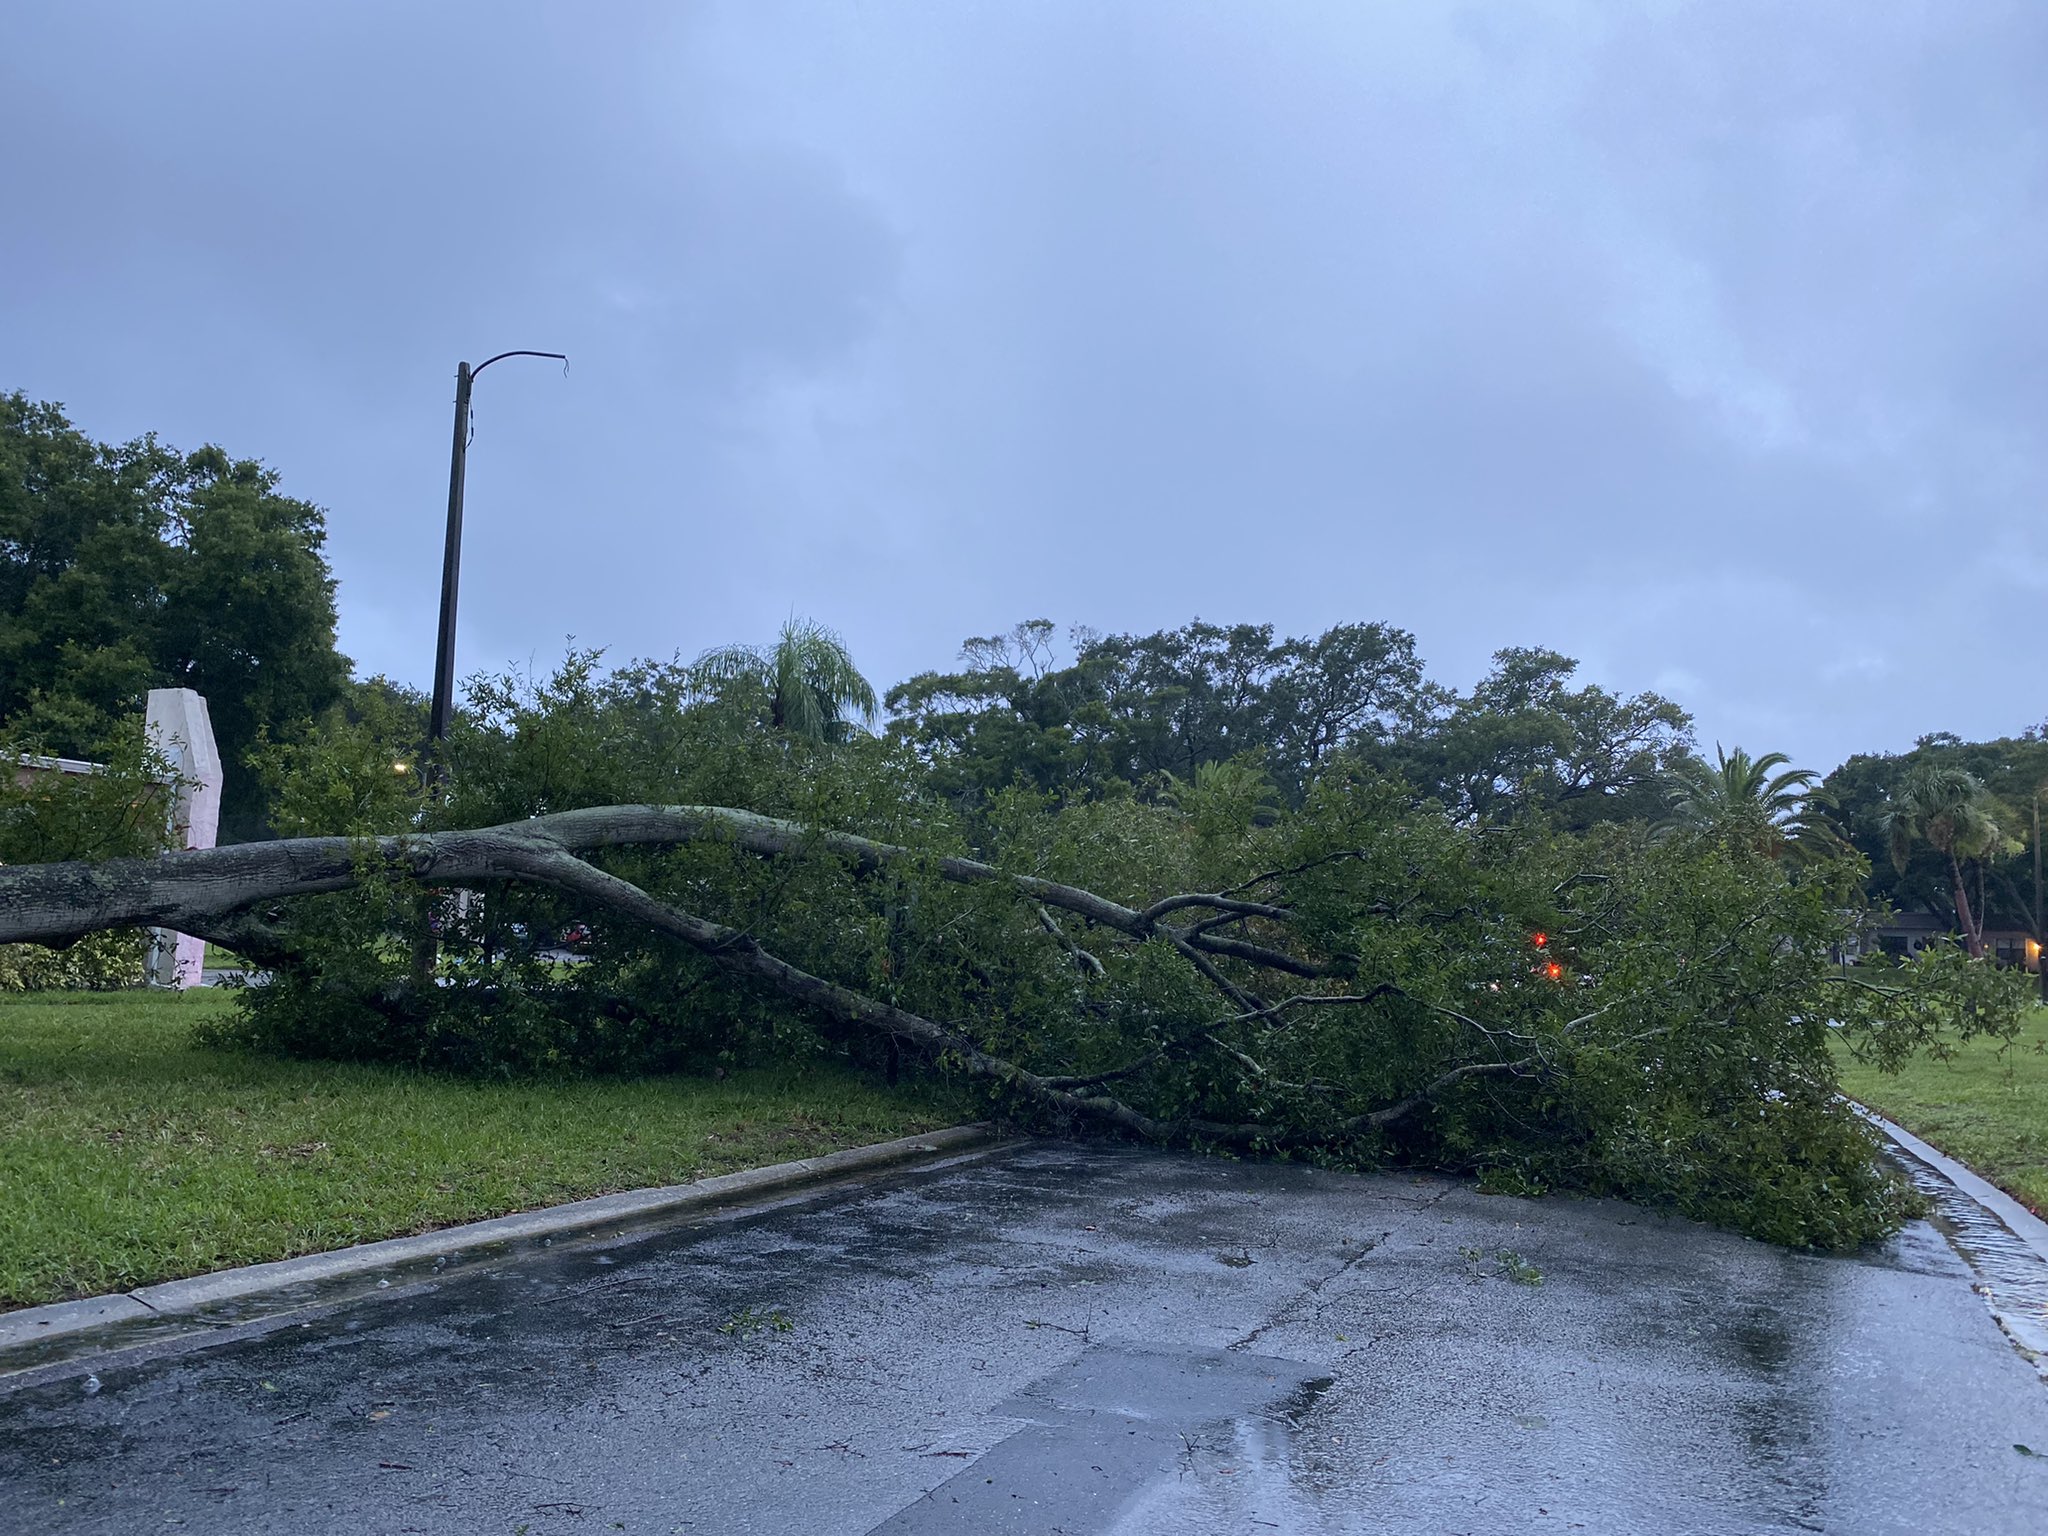 Tree down across road in Clearwater